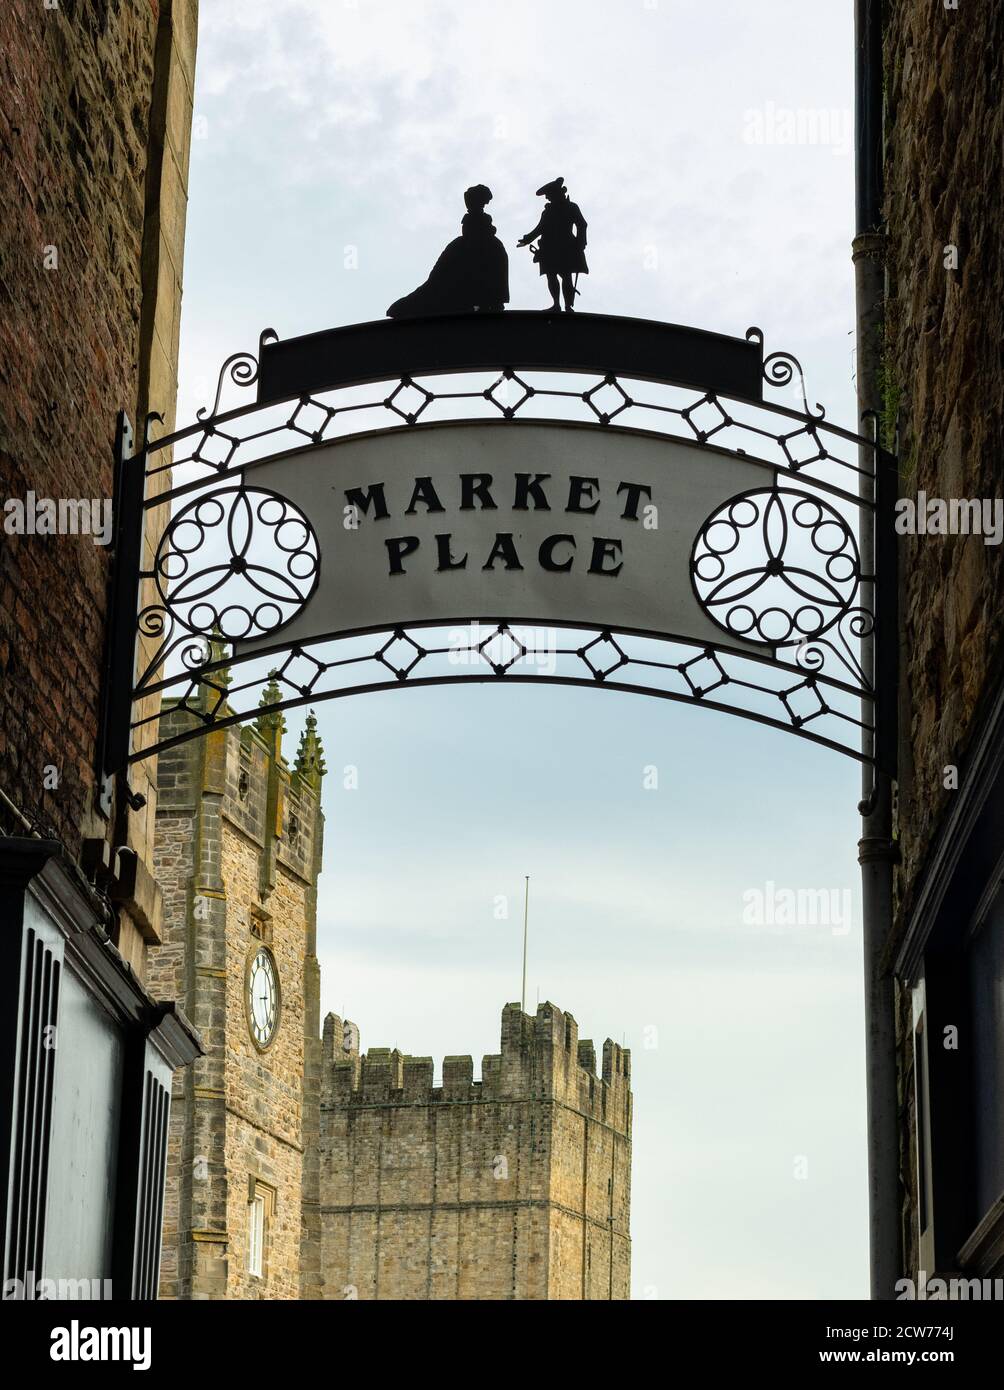 Richmond, North Yorkshire, England - Market Place sign Stock Photo